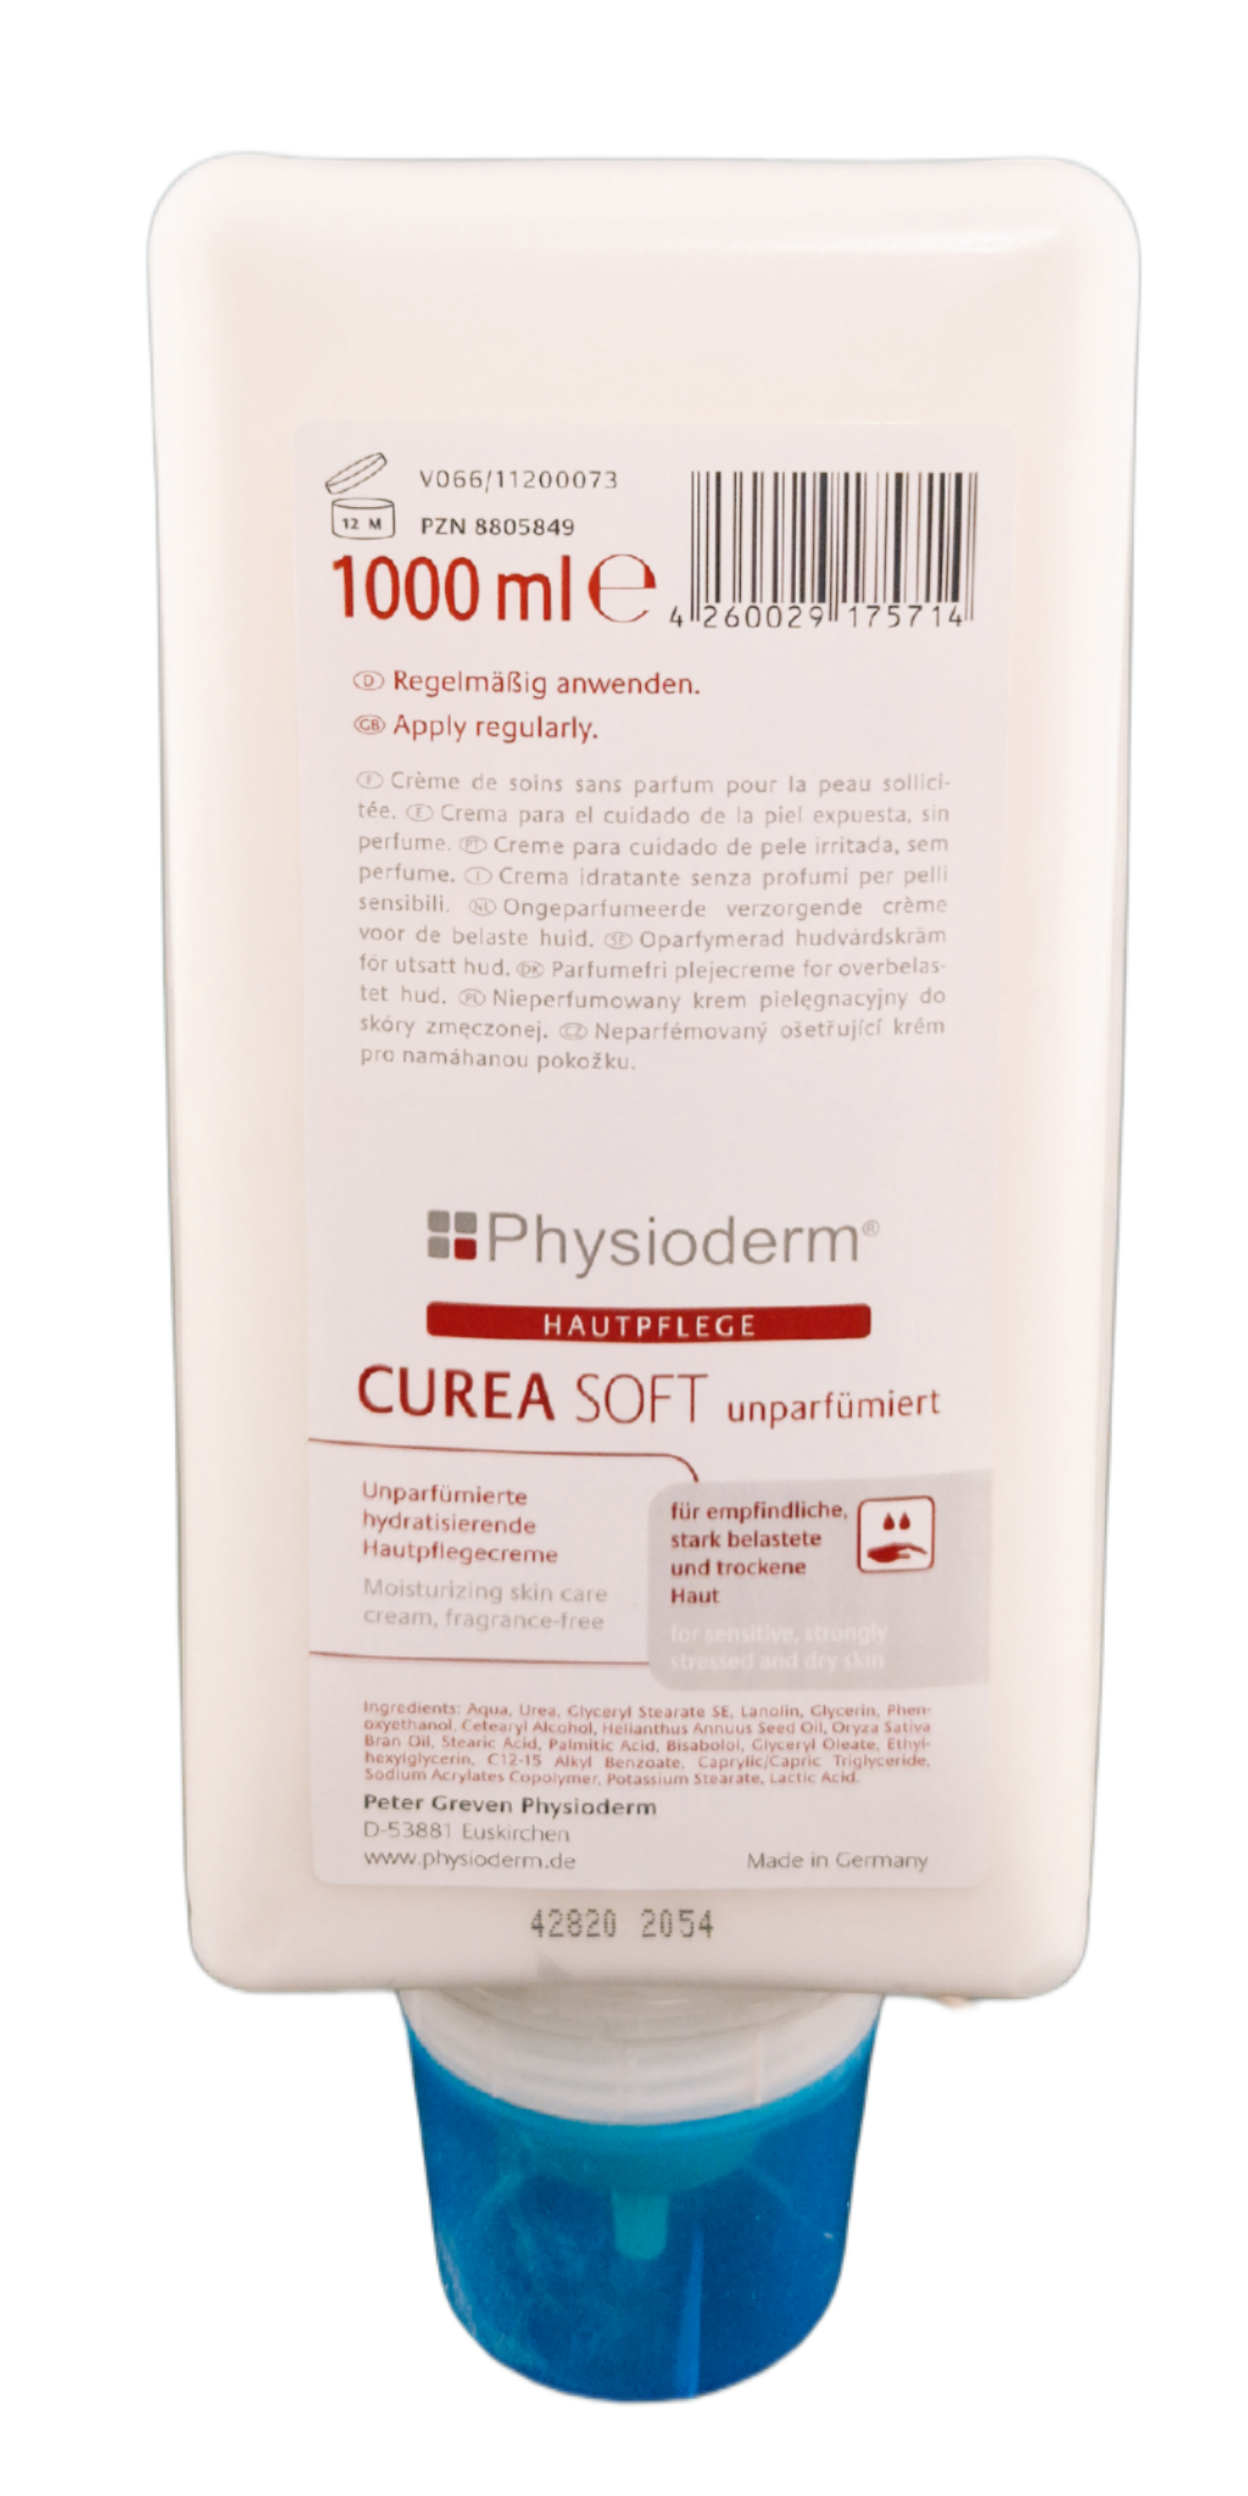 Physioderm ® Curea Soft unparfümiert Hautpflege Handcreme Pflegecreme 1000 ml Flasche